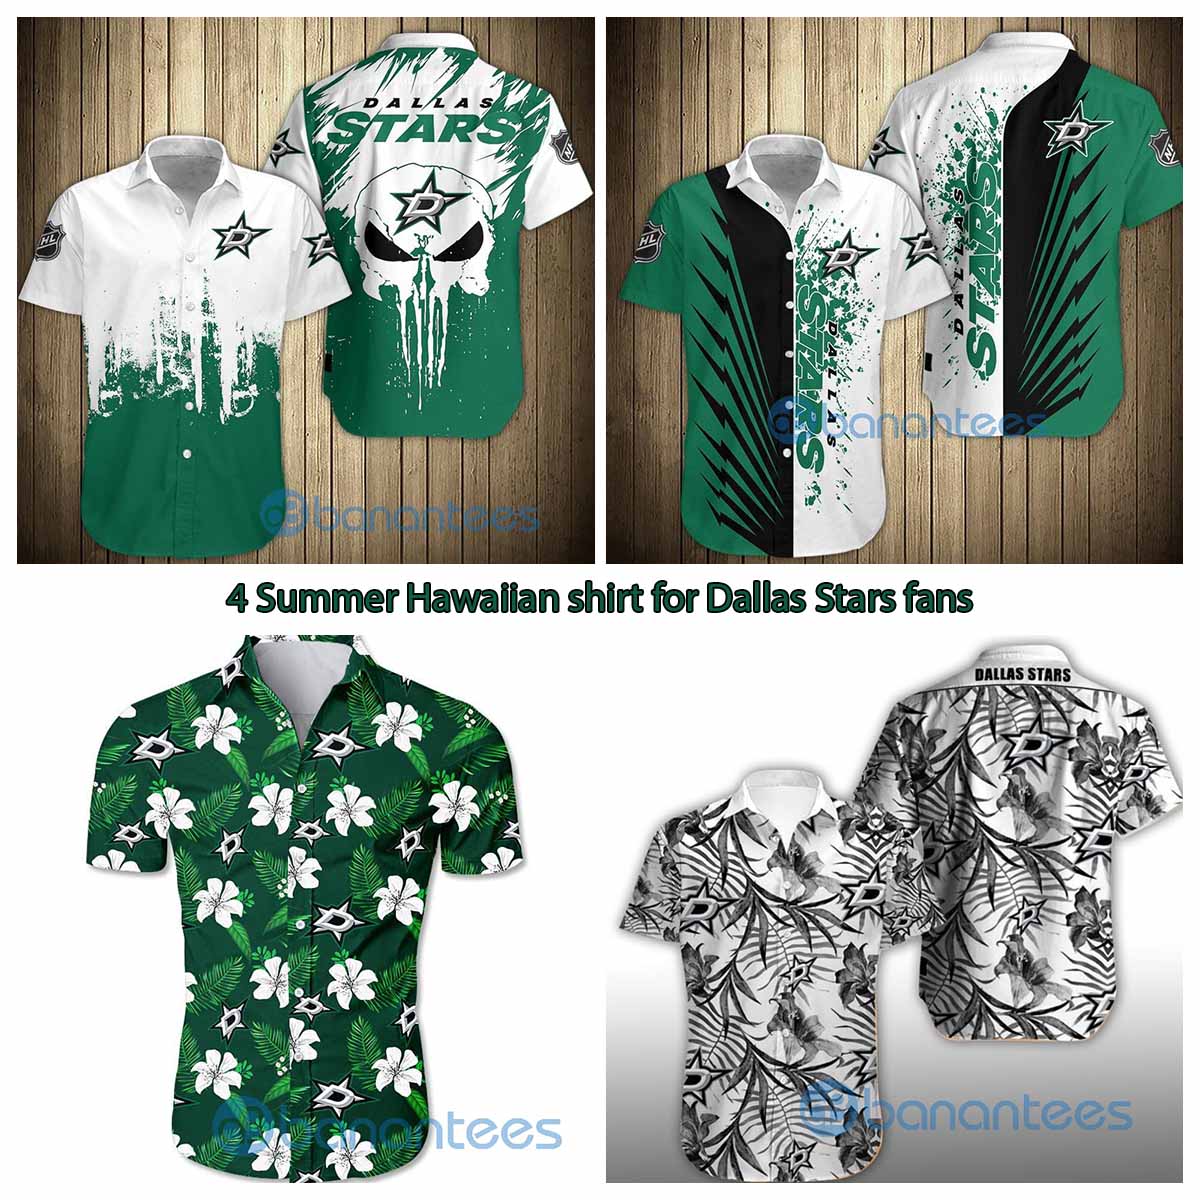 4 Summer Hawaiian shirt for Dallas Stars fans